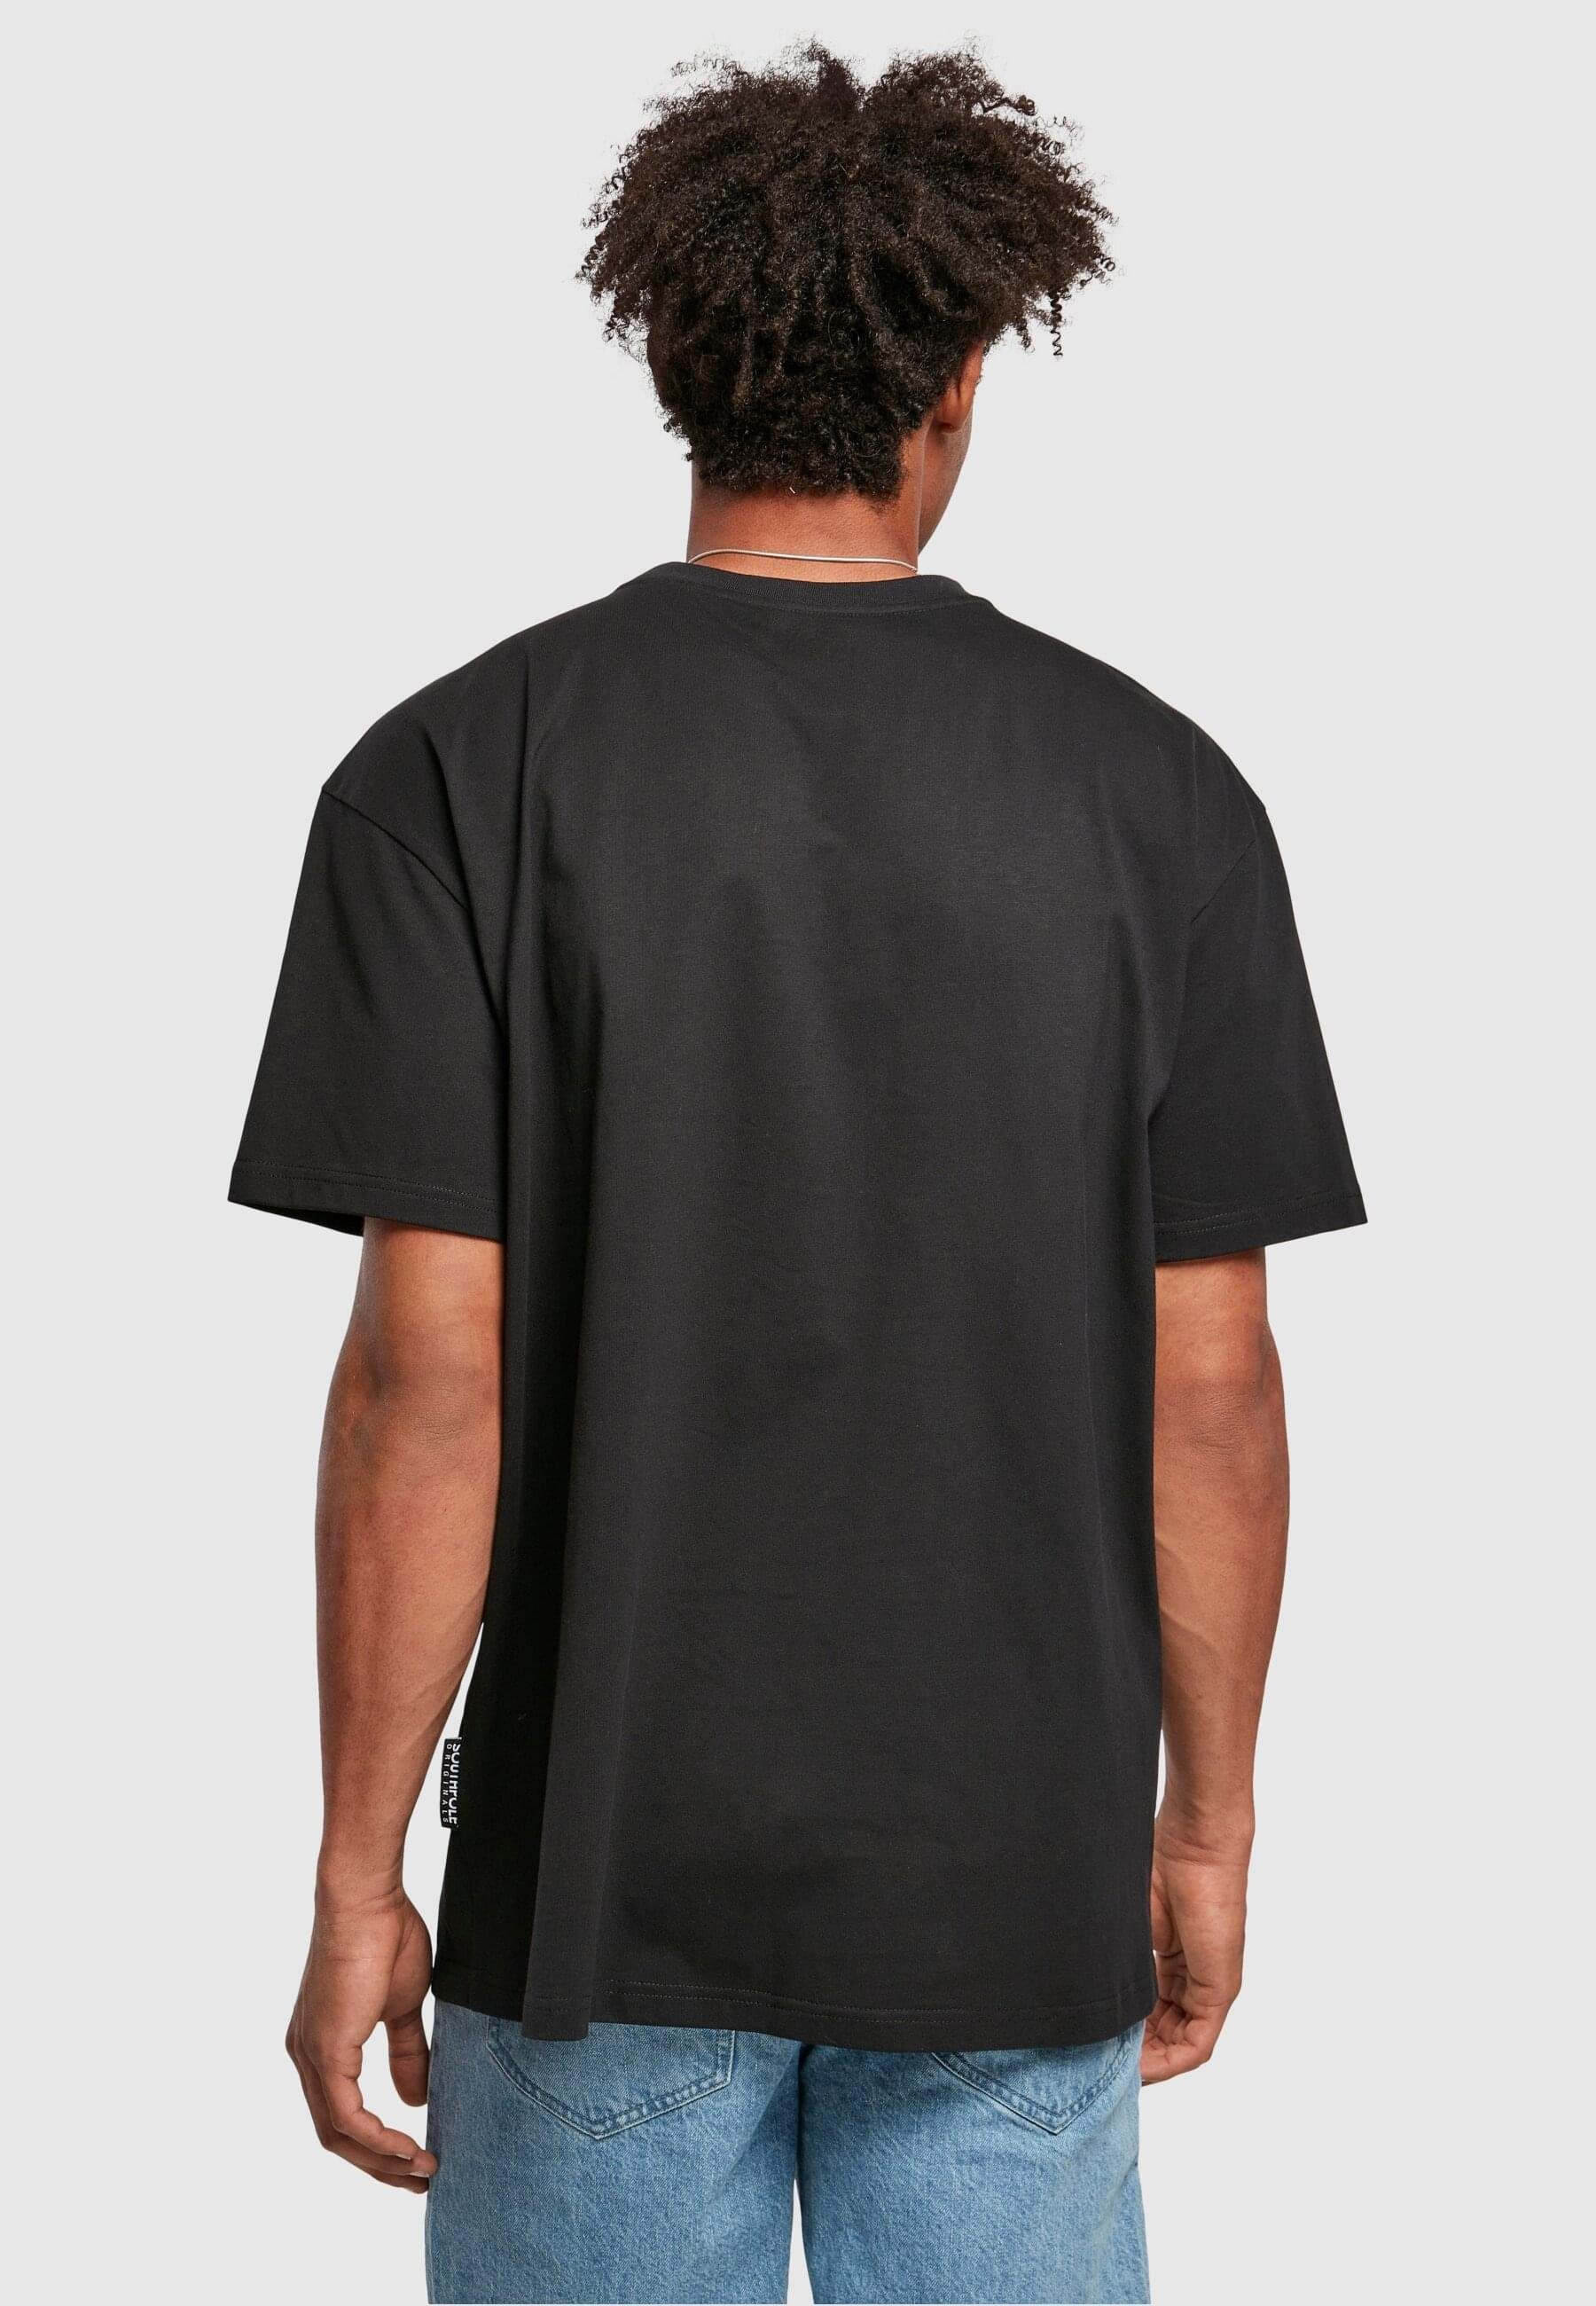 Tee Southpole black (1-tlg) Puffer Southpole Herren Print T-Shirt